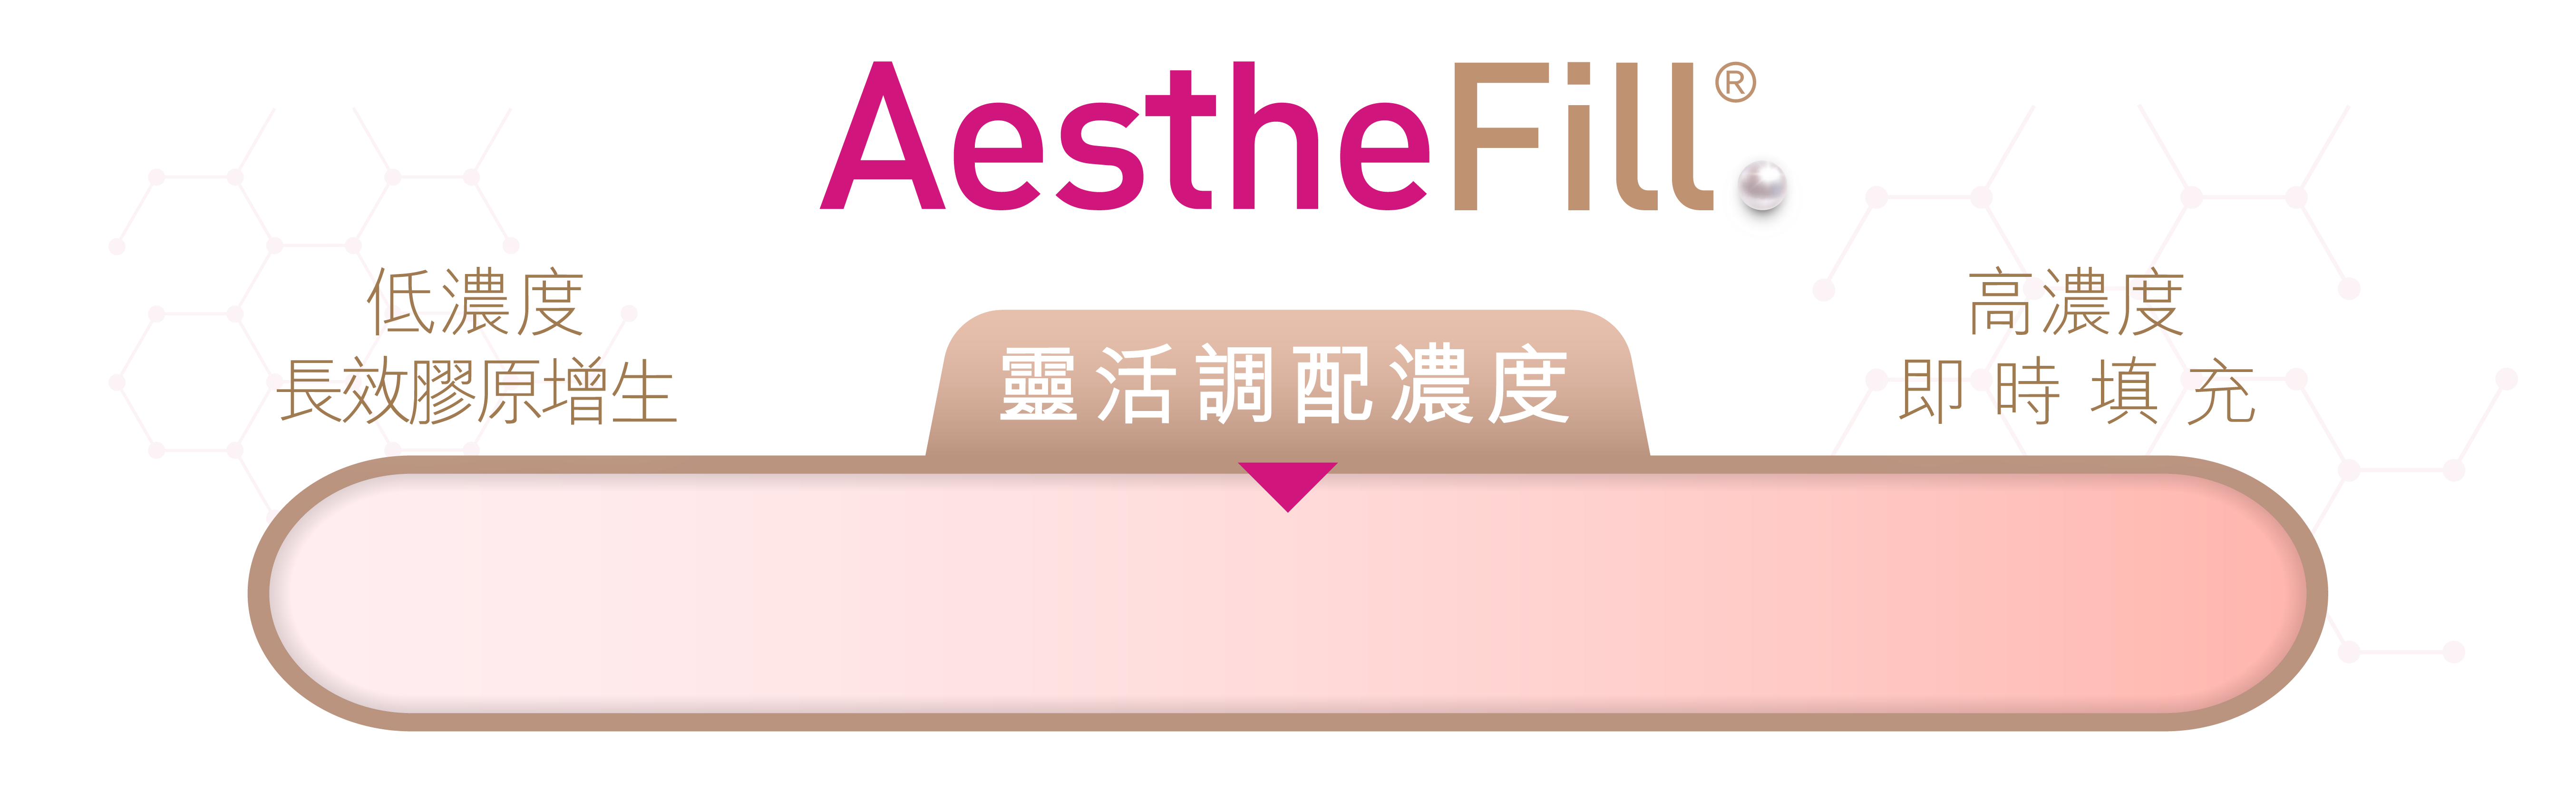 Aesthefill Icons 09 - ​輪廓療程